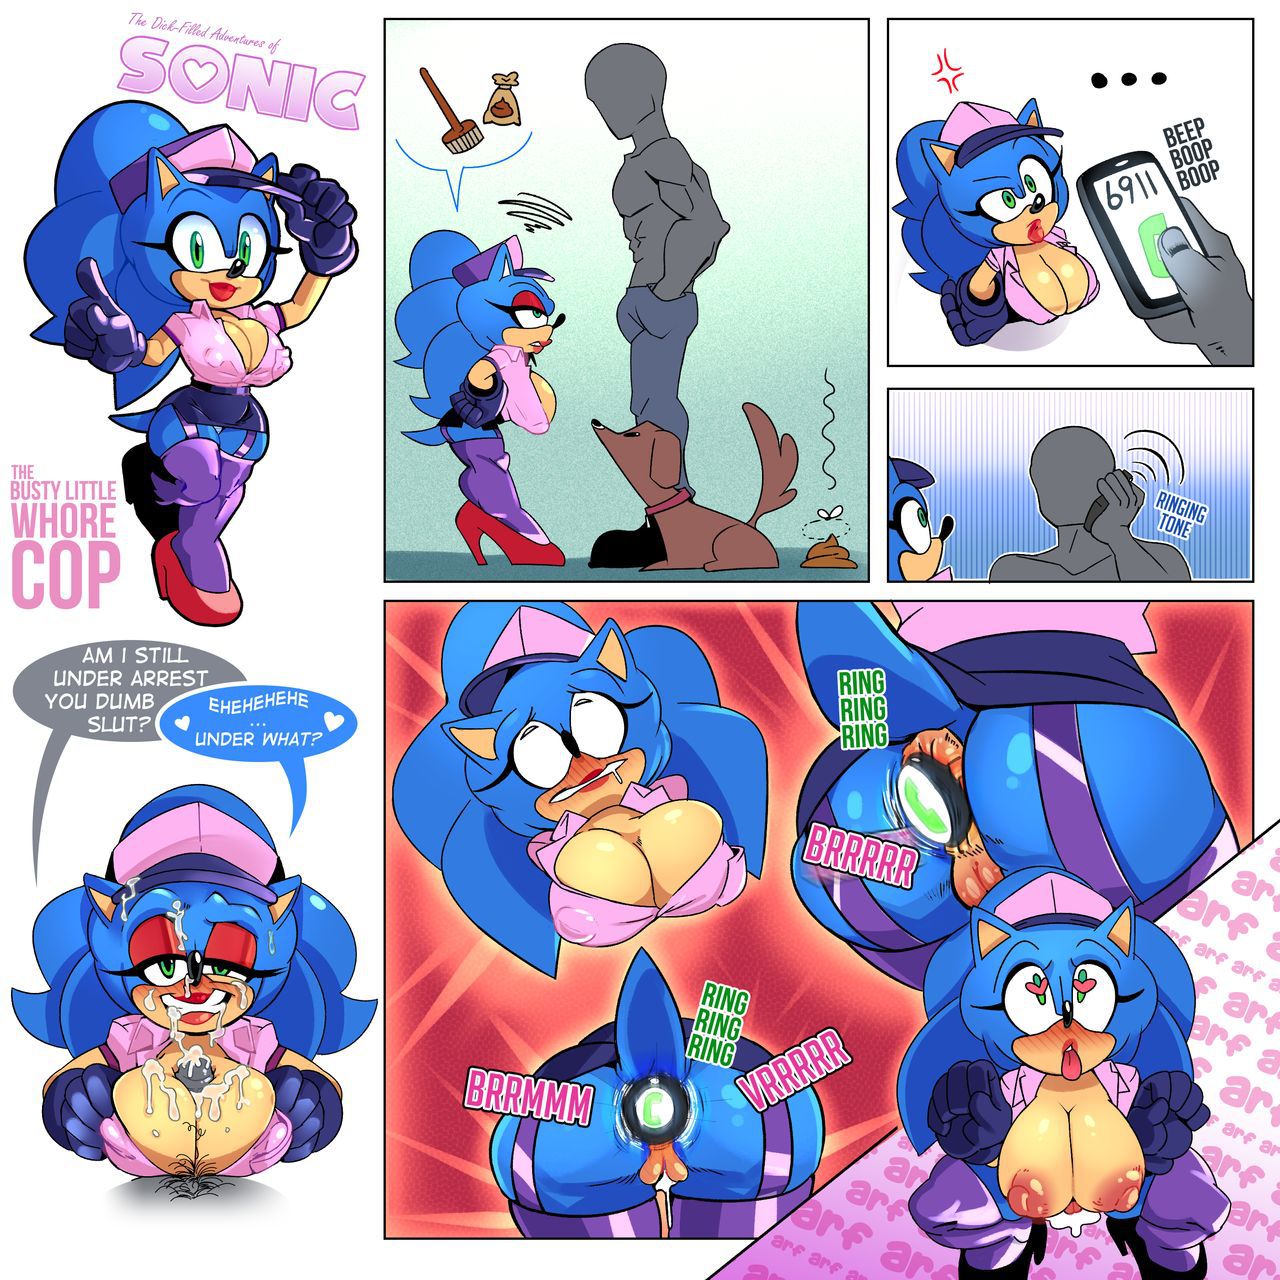 [Cuisine] Adventures of Whore Cop (Sonic The Hedgehog) 4